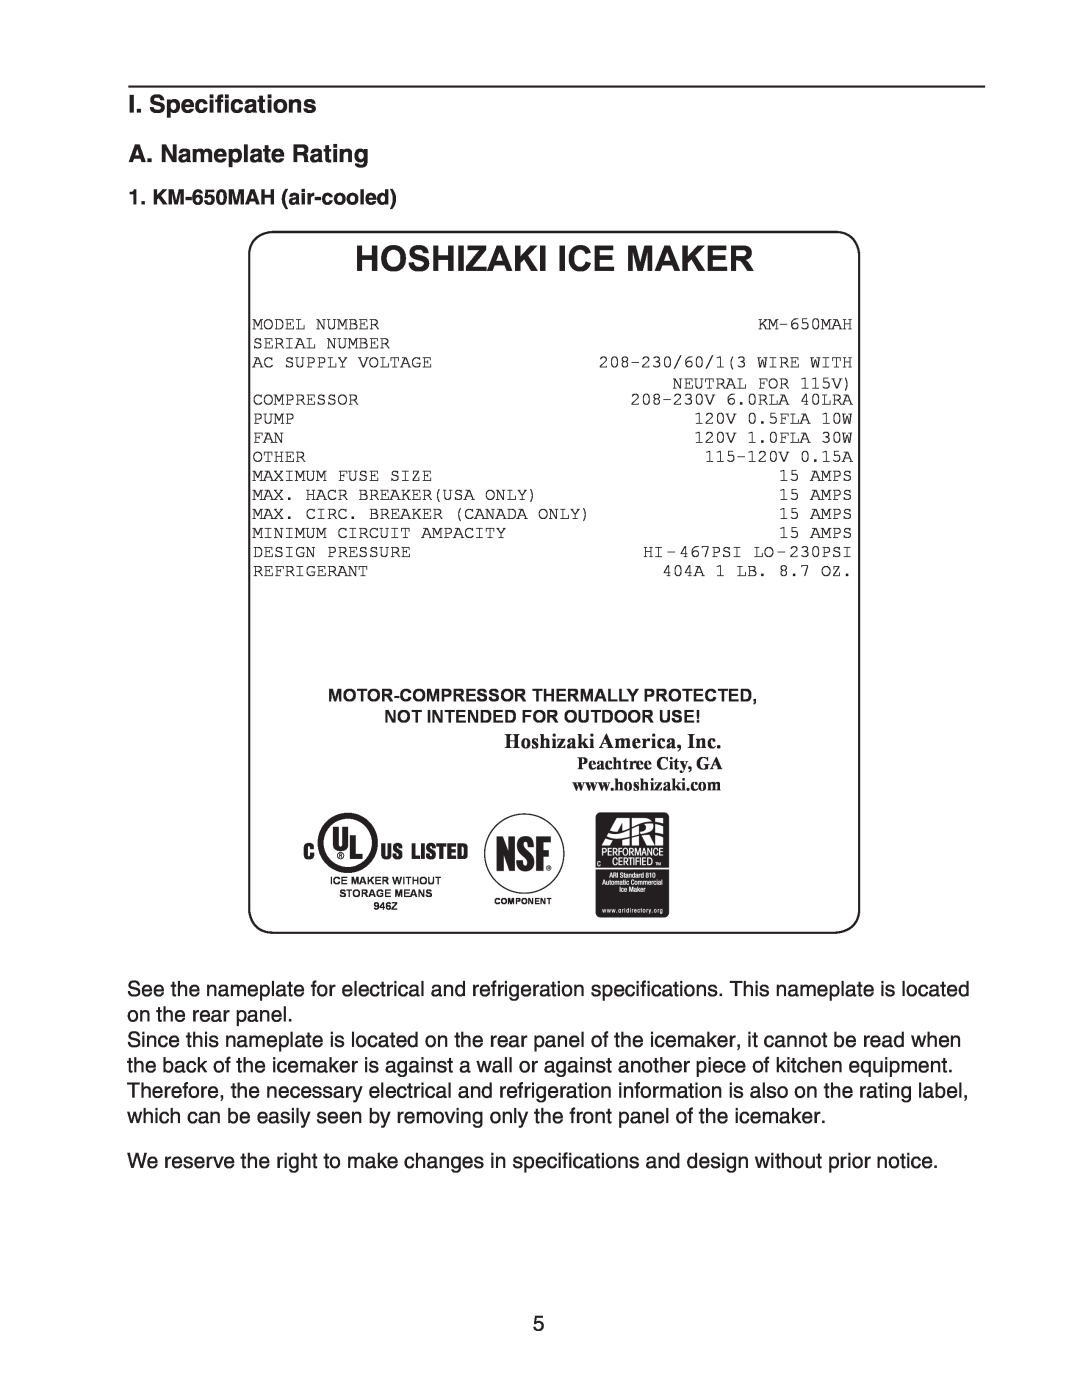 Hoshizaki Hoshizaki Ice Maker, I. Specifications A. Nameplate Rating, KM-650MAH air-cooled, Hoshizaki America, Inc 